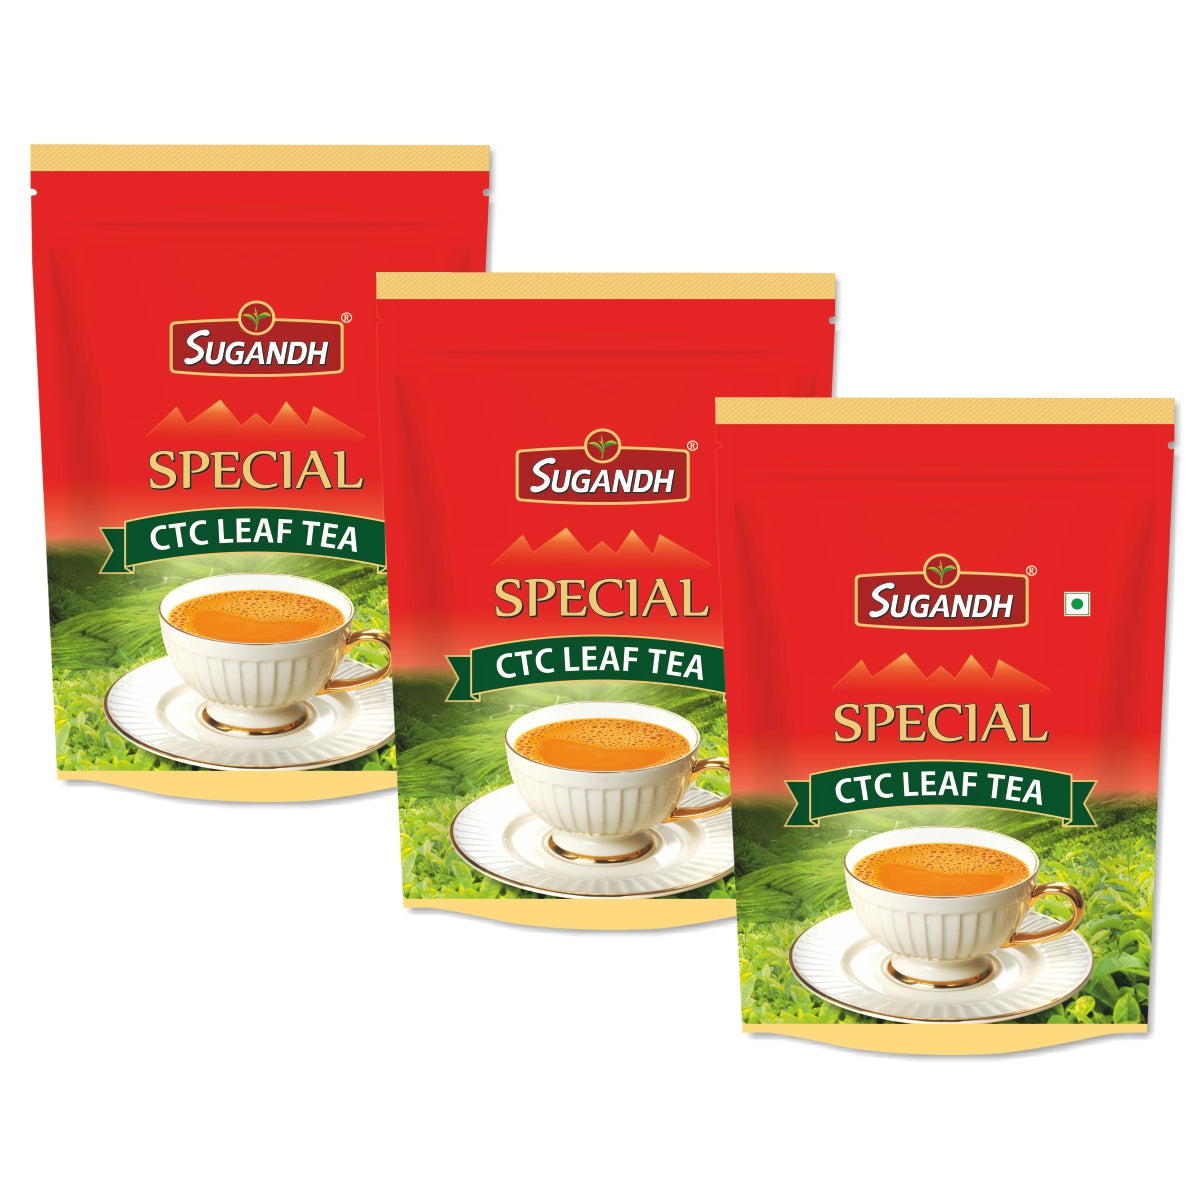 Sugandh Special CTC Leaf Tea 3 kg (Pack of 3 x 1 kg Each)